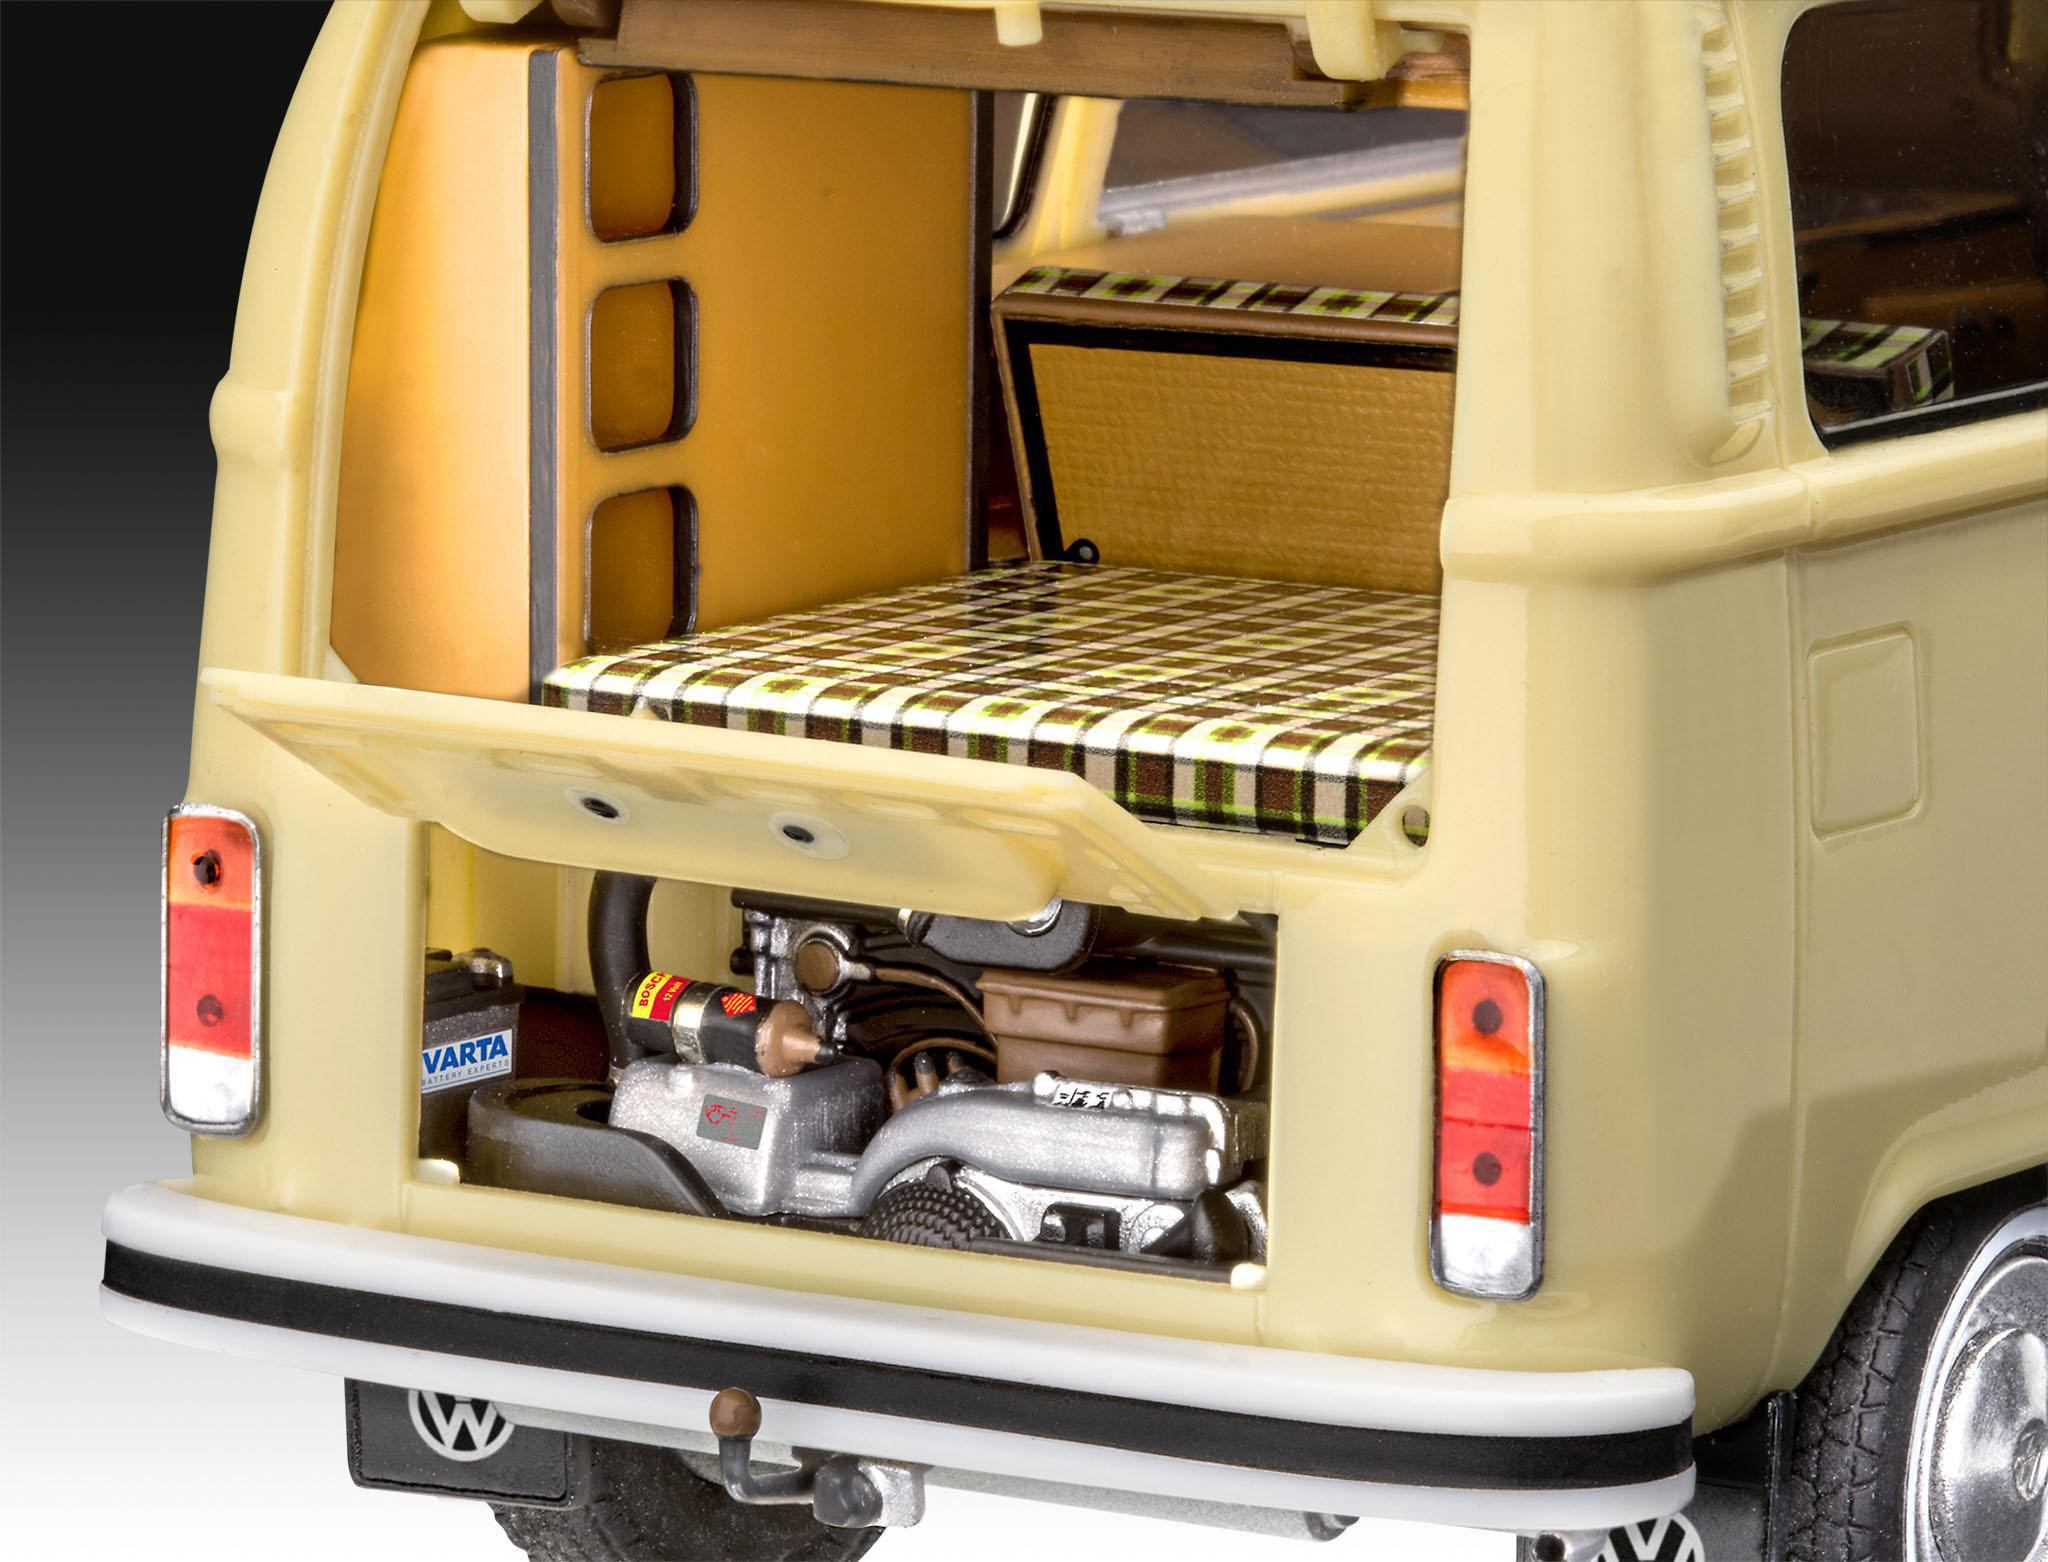 REVELL Model Set VW T2 Camper easy-click-system Modellbauspielzeugauto, Mehrfarbig